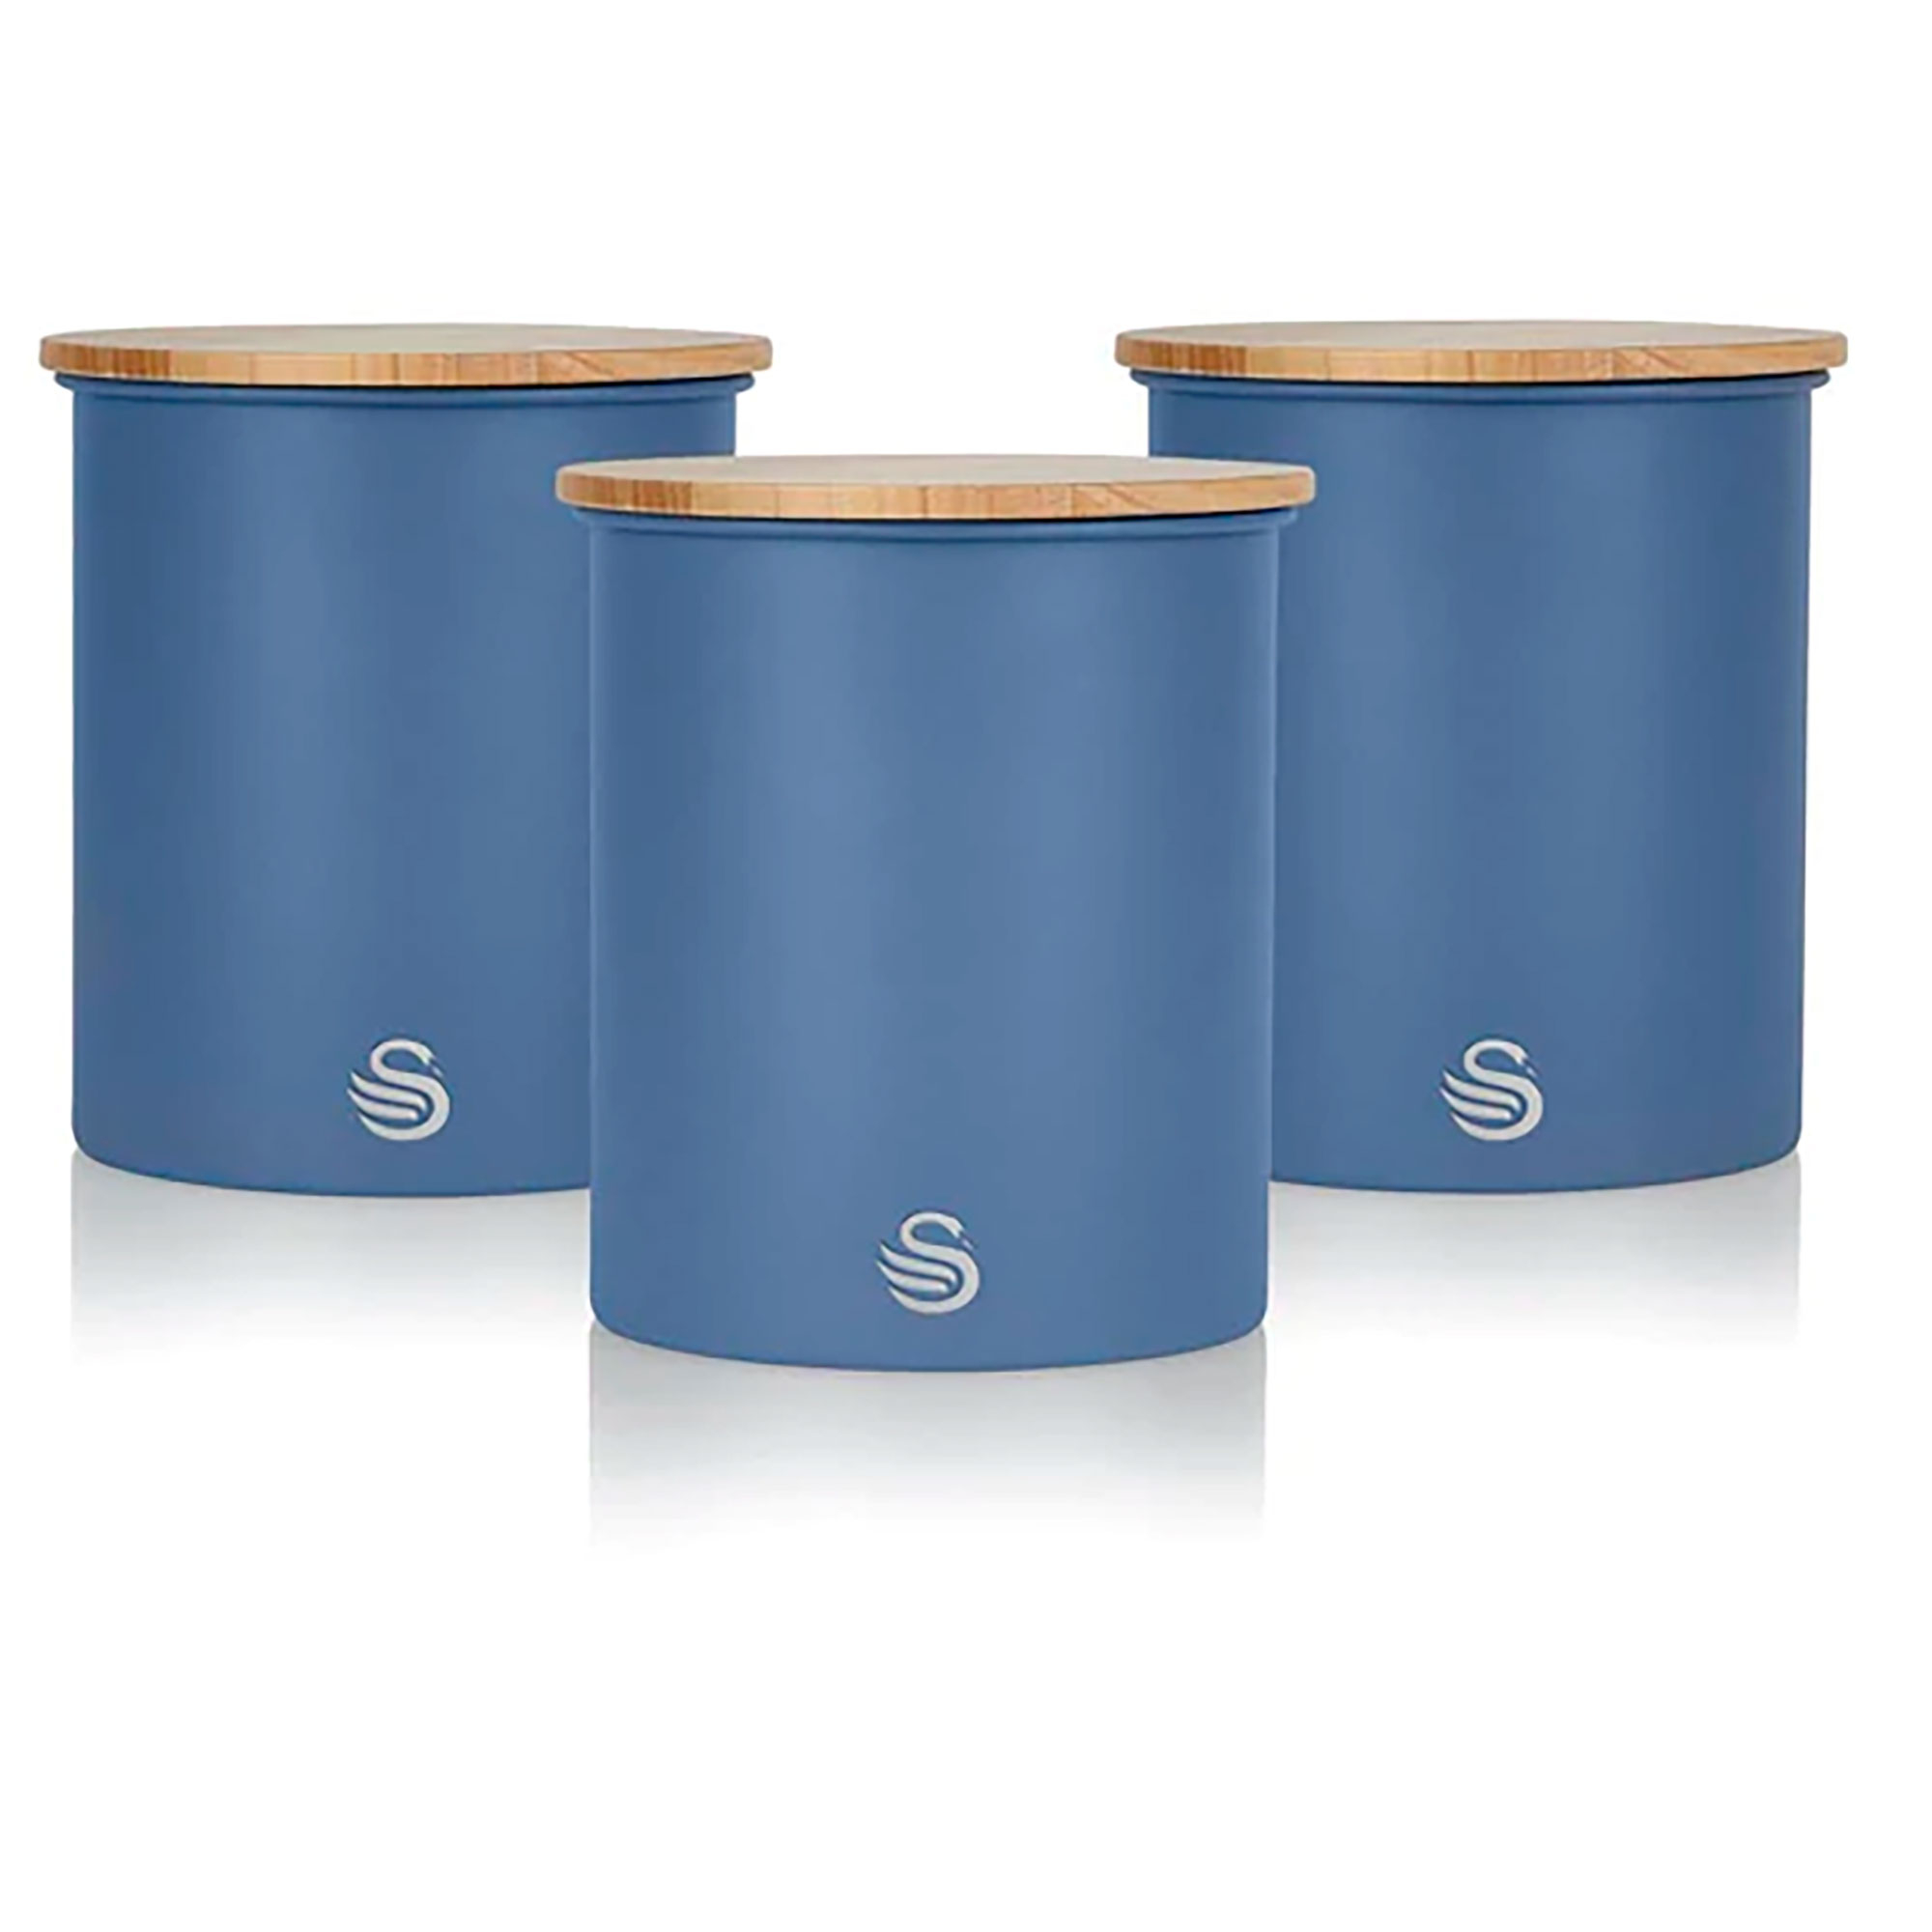 Swan Nordic Juego de 3 Botes Cocina Almacenaje de Acero al Carbono Resistente, Tapa de Bambú, Para Guardar Té, Café y Azúcar, Diseño Moderno, Azul